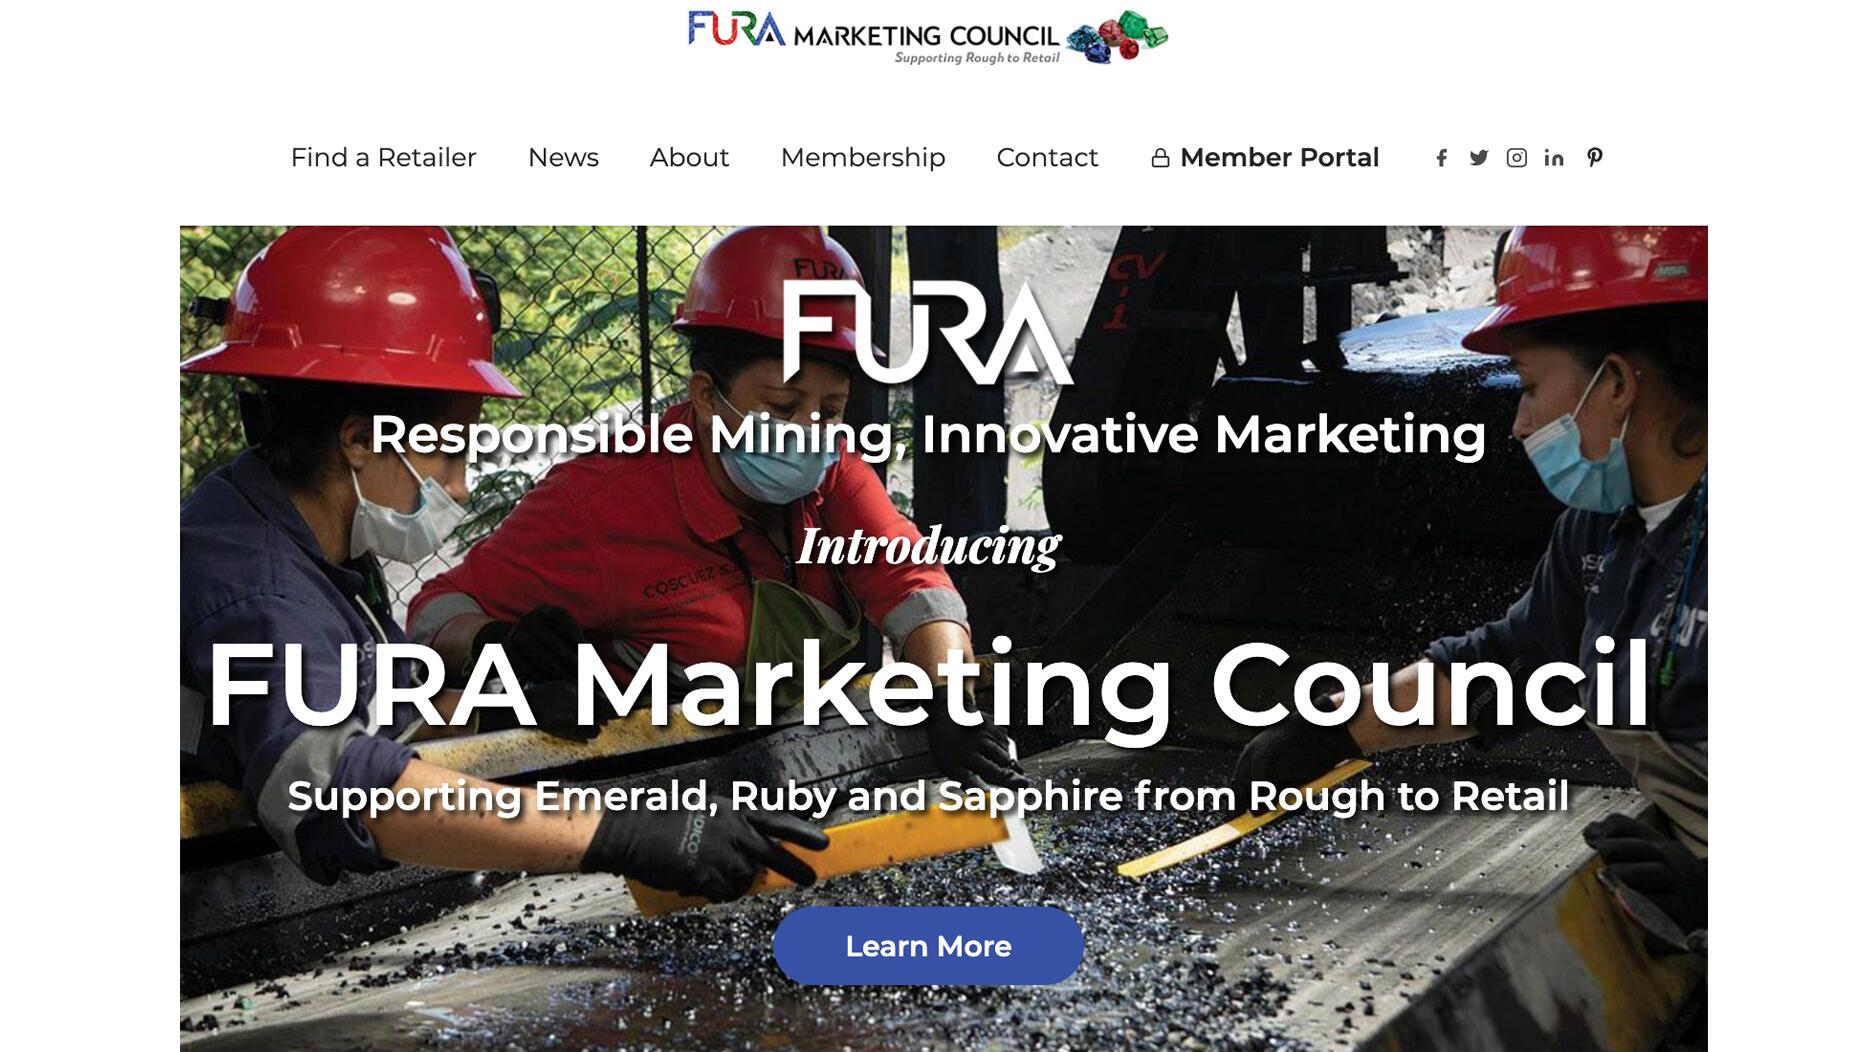 20210513_Fura-Marketing-Council.jpg